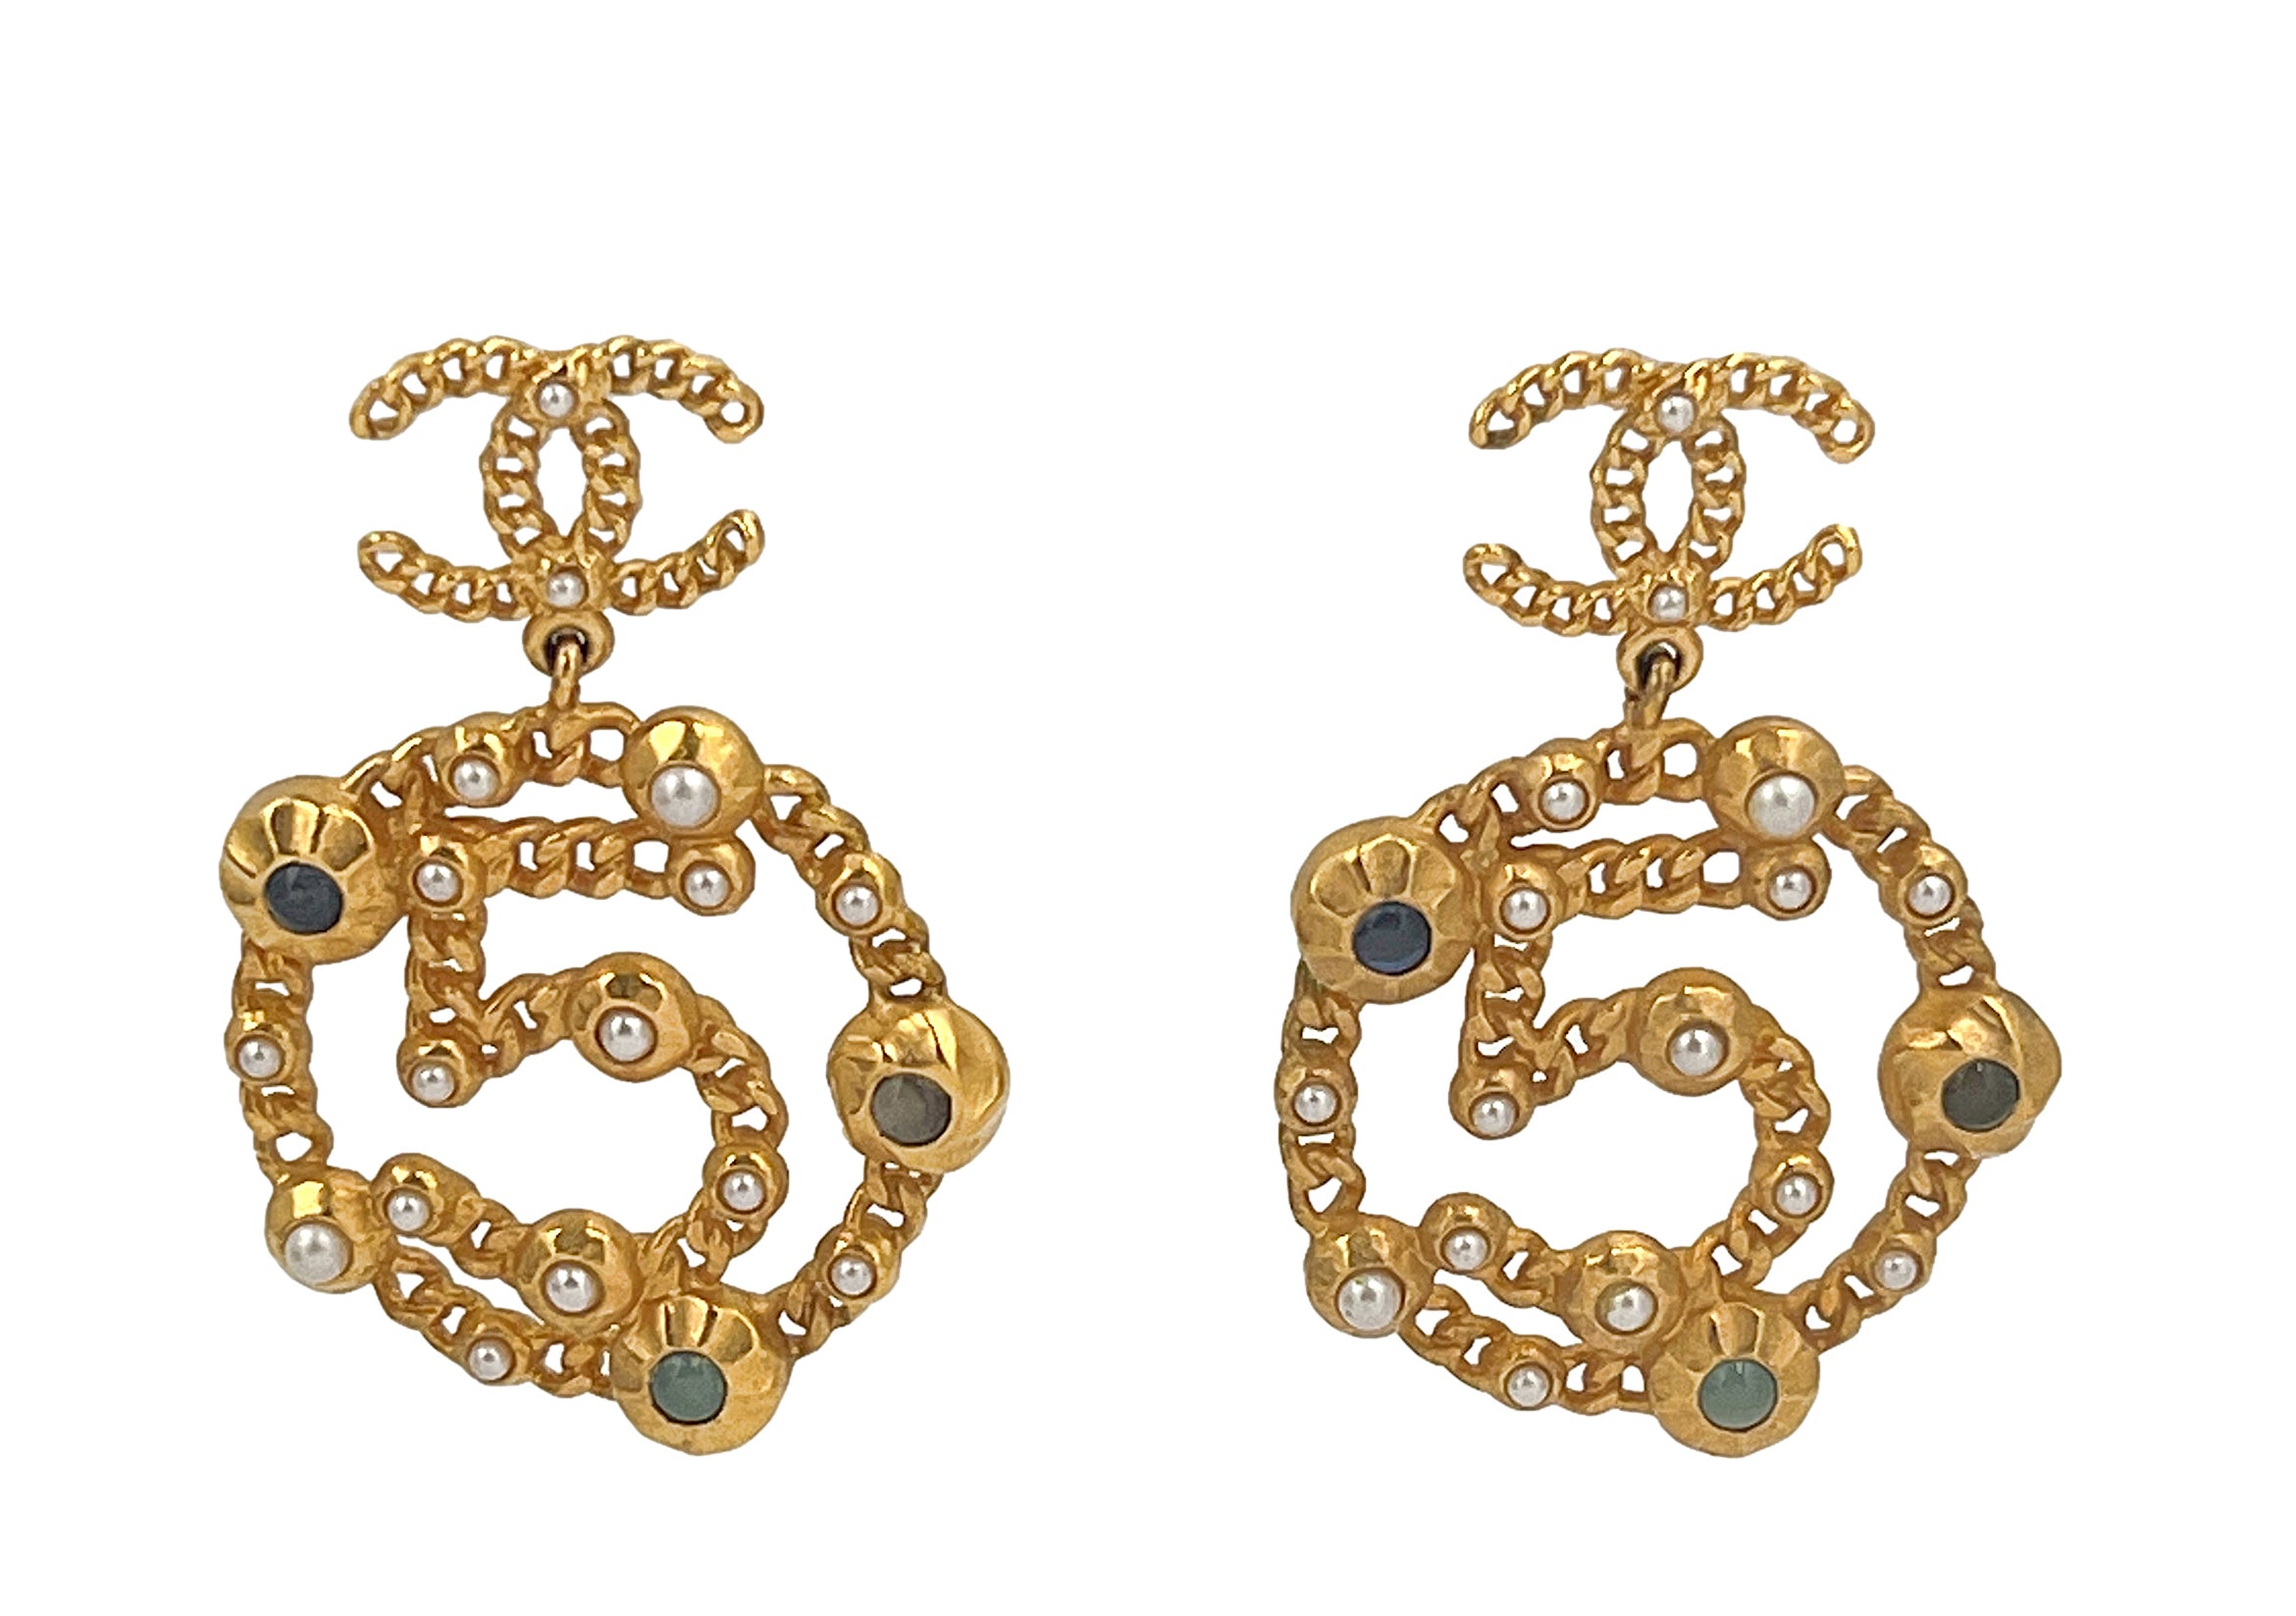 Amriapk Jewelry - AA105 Chanel earrings fashion women brand jewelry stud  earrings dangle earrings drop earrings #chanel #brooches #earrings  #chanelearrings #chaneearring #chaneljewelry #womenjewelry #fashionjewelry  #fashionaccessories #brandjewelry